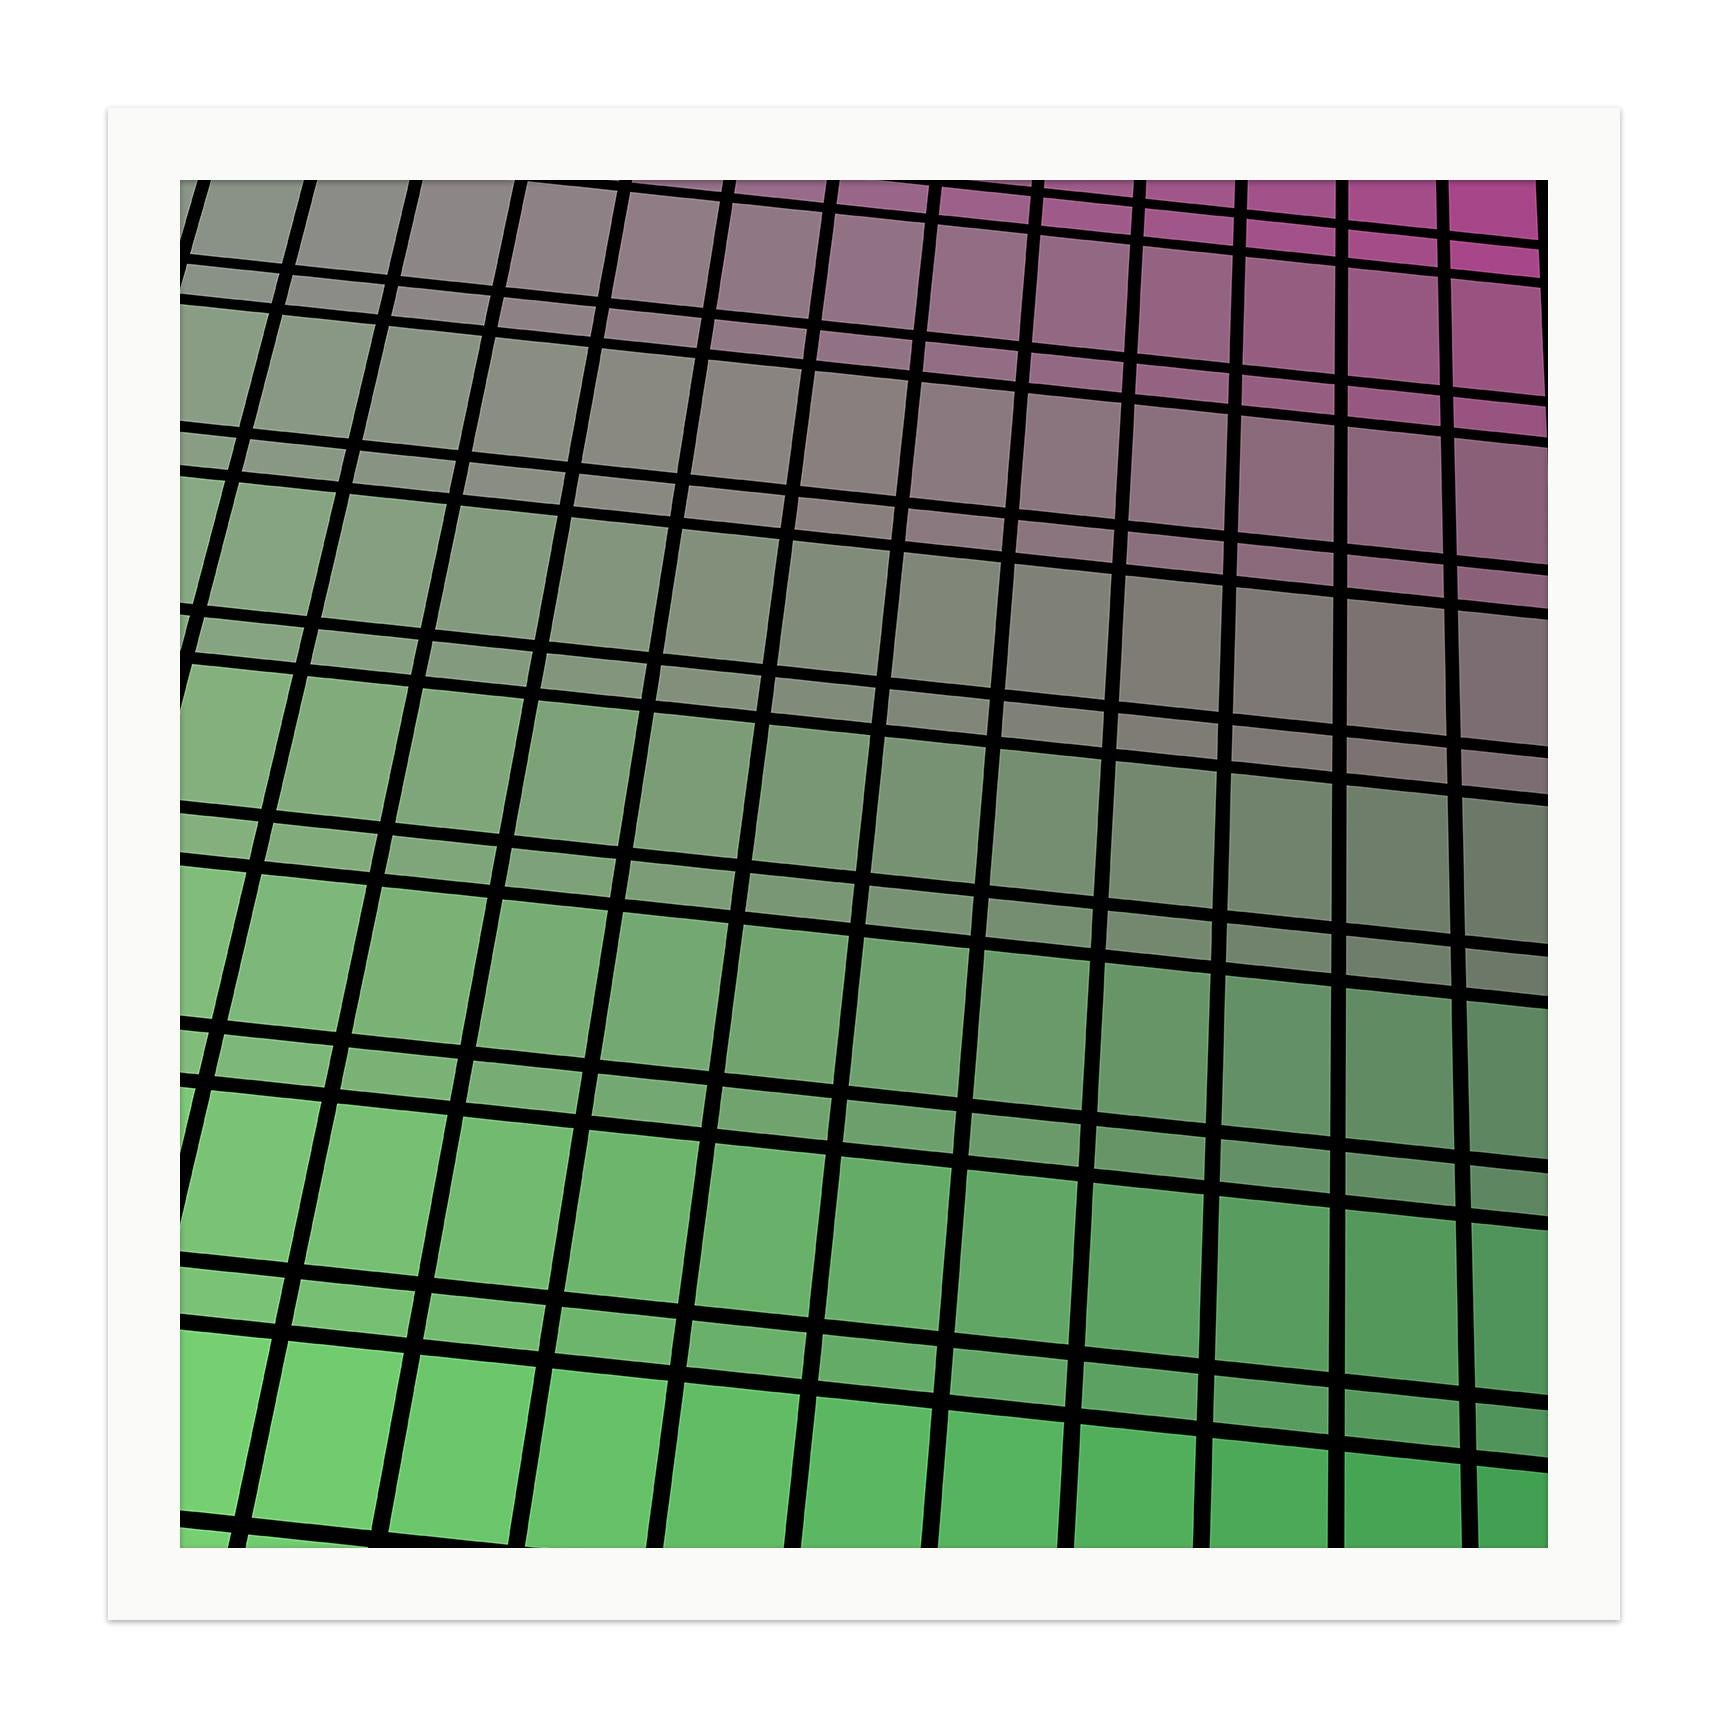 Jeff Davis Abstract Painting - "Facade 84" - single edition digital abstract print, green/purple, framed